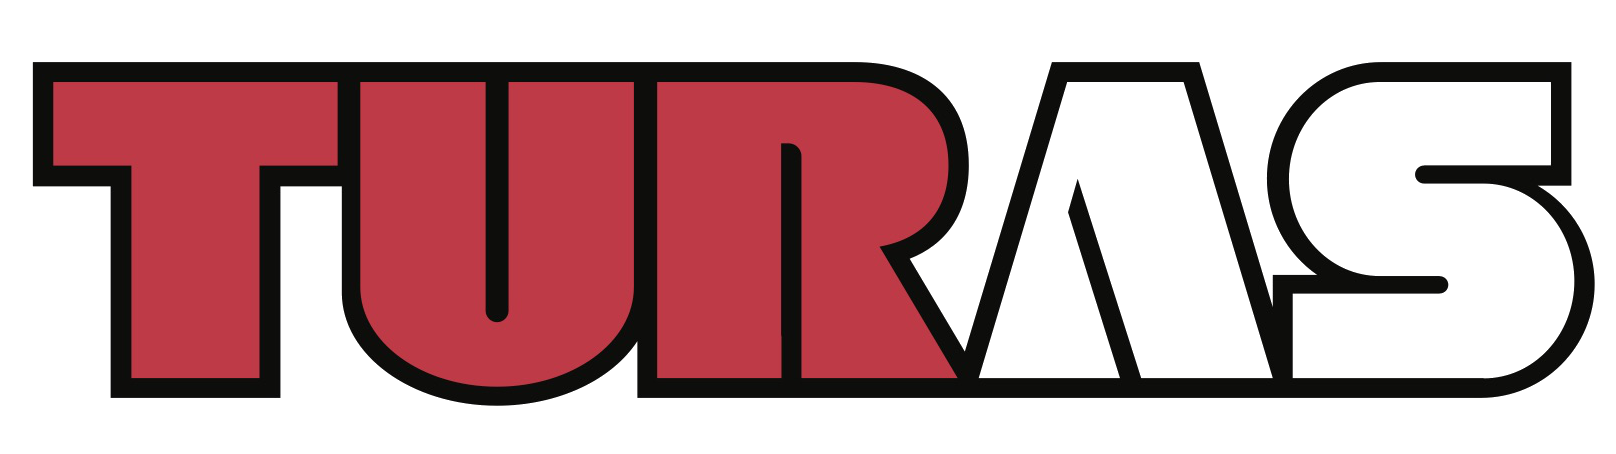 Fabryka Turas logo